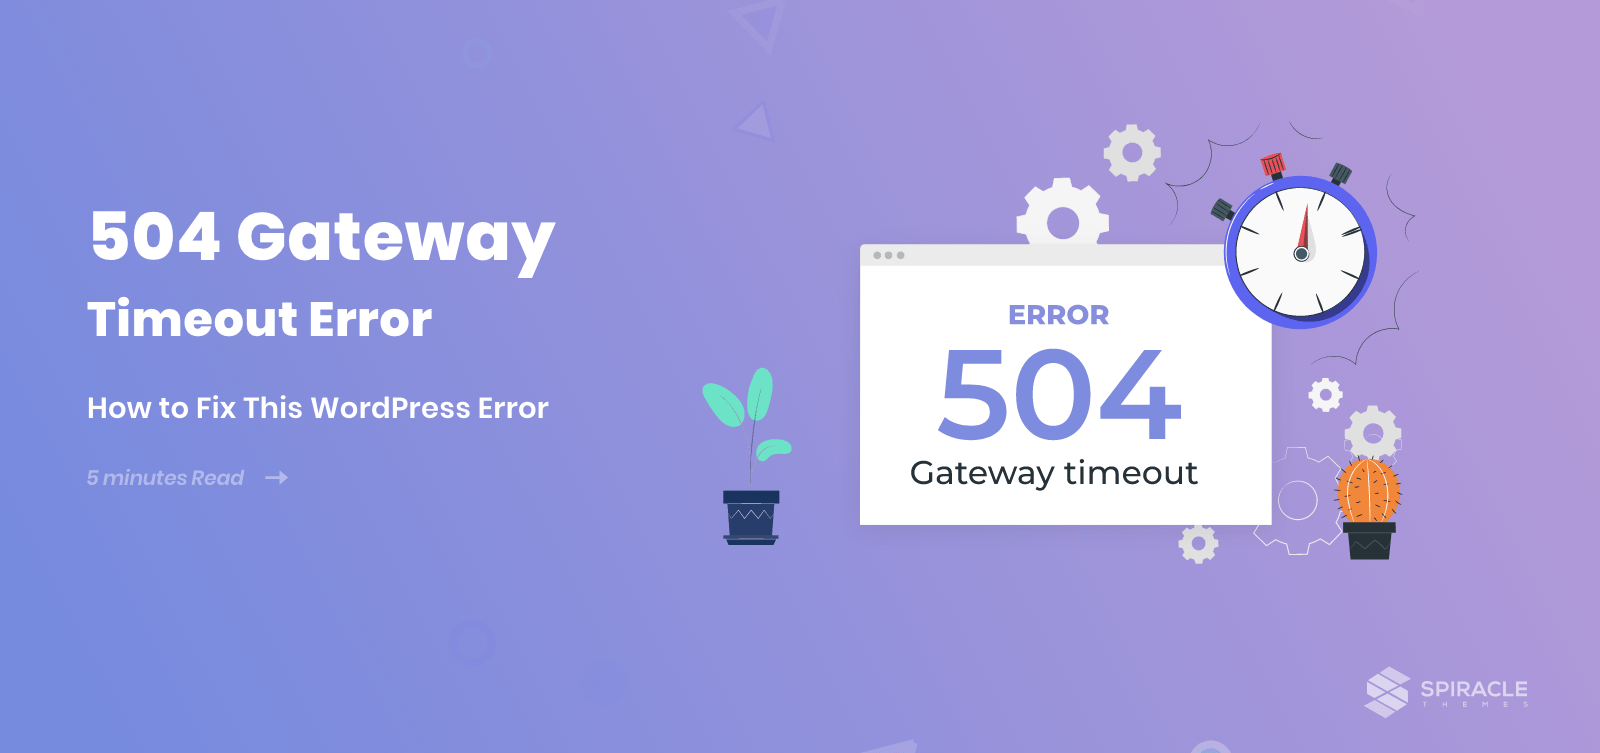 504 gateway timeout error in WordPress